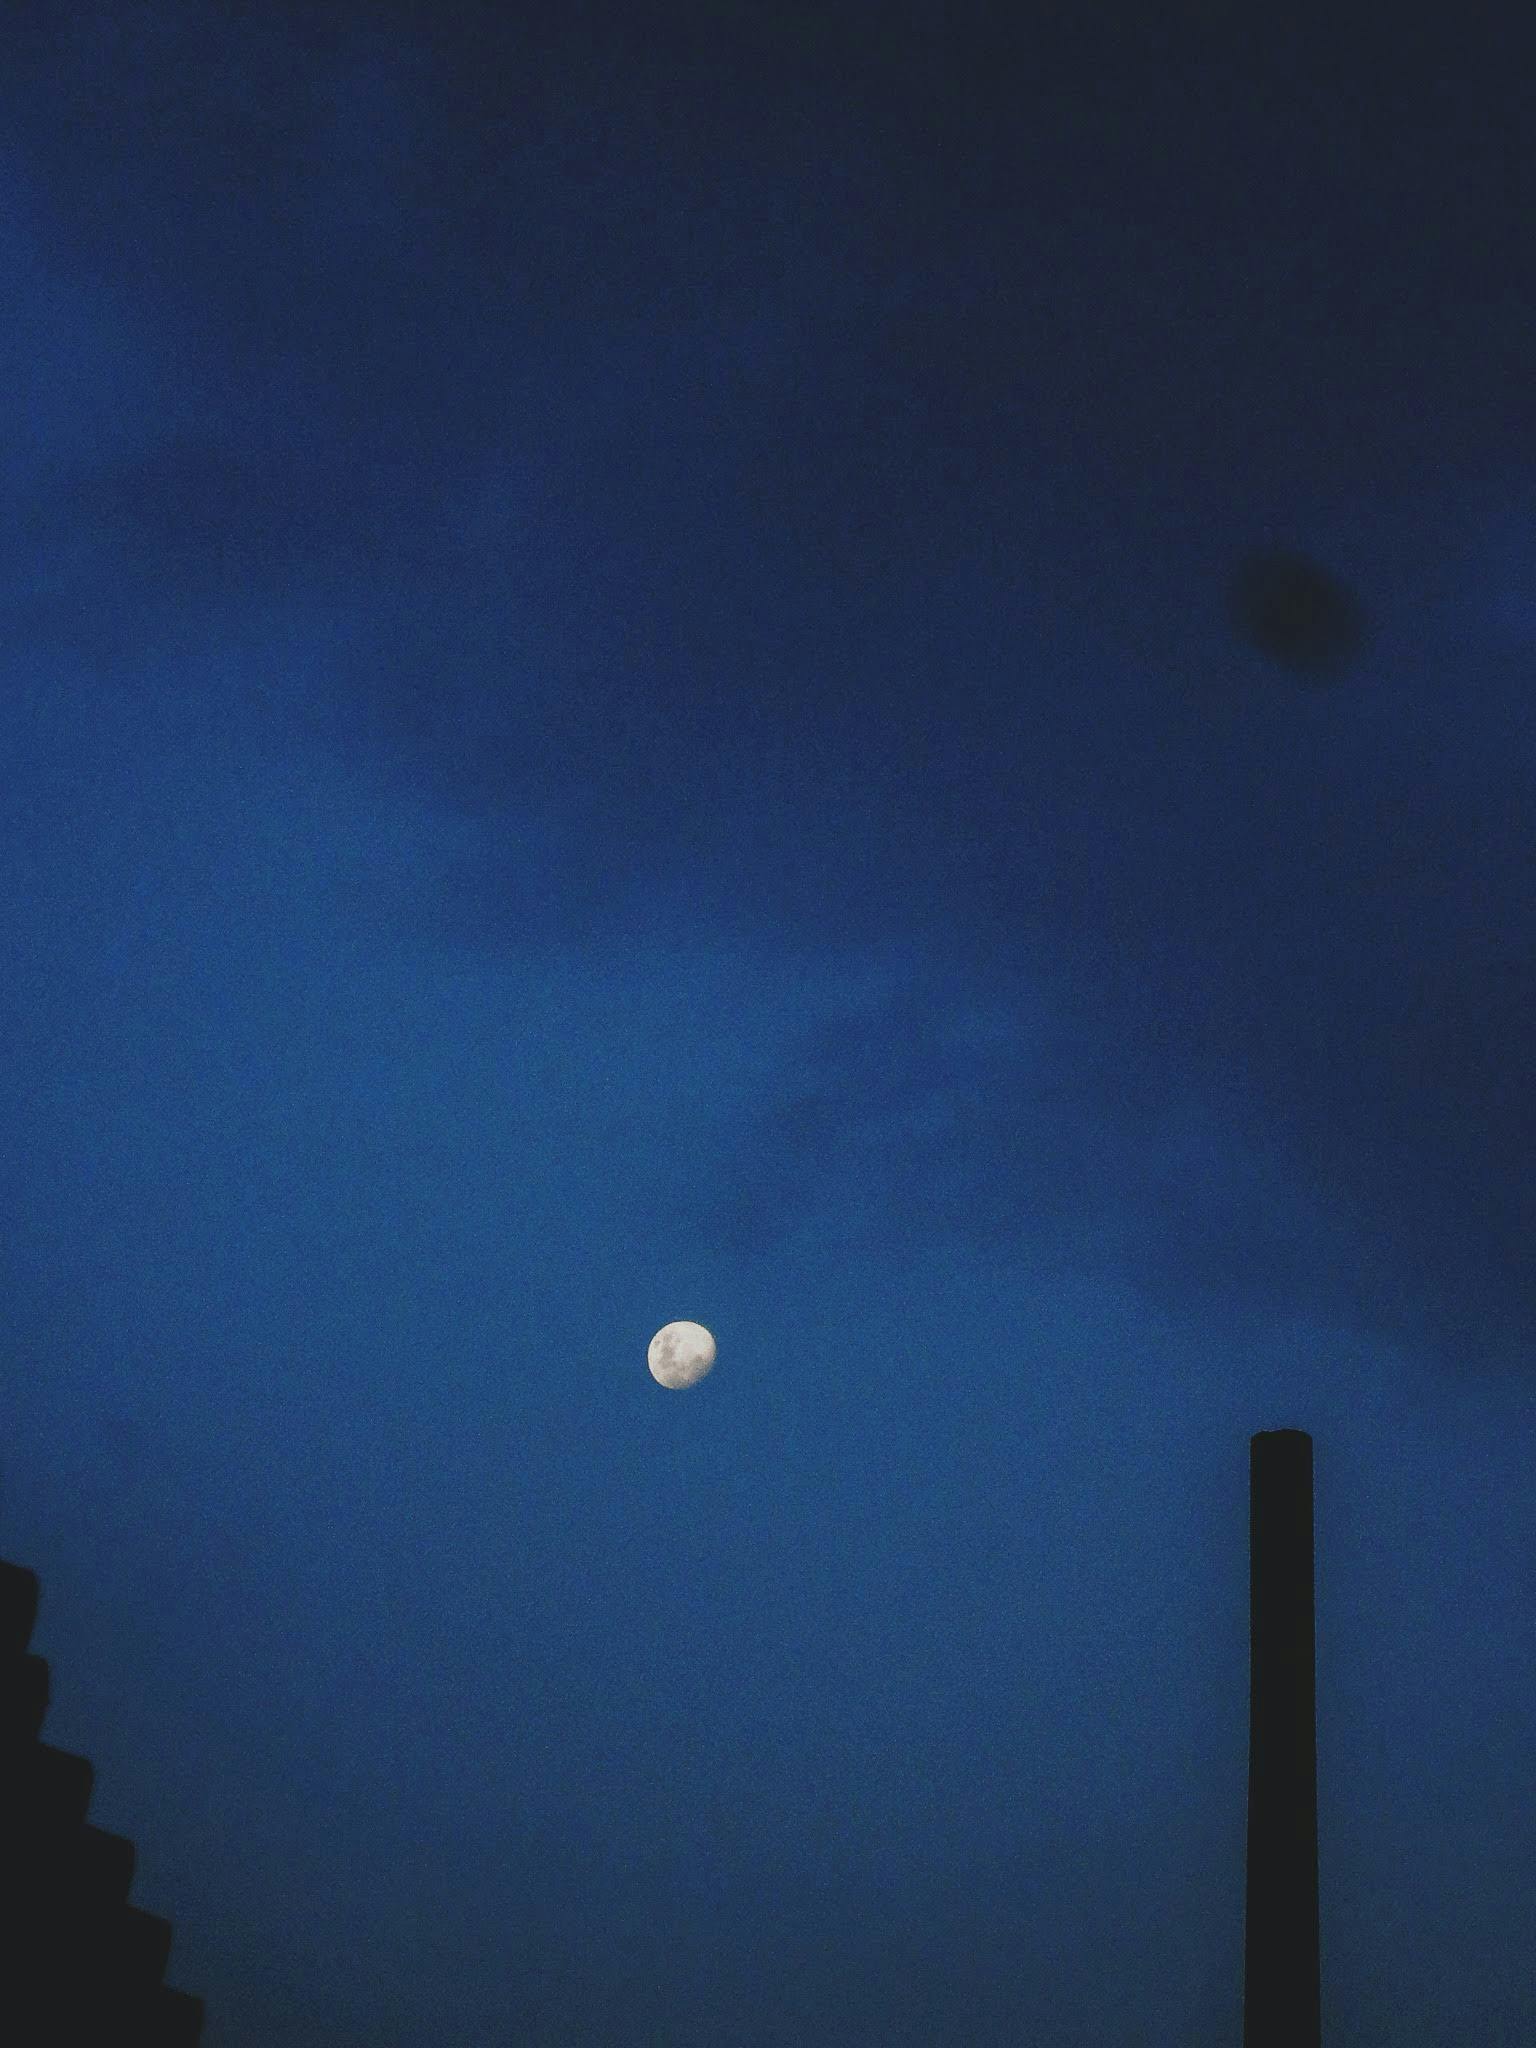 White Moon at Night · Free Stock Photo